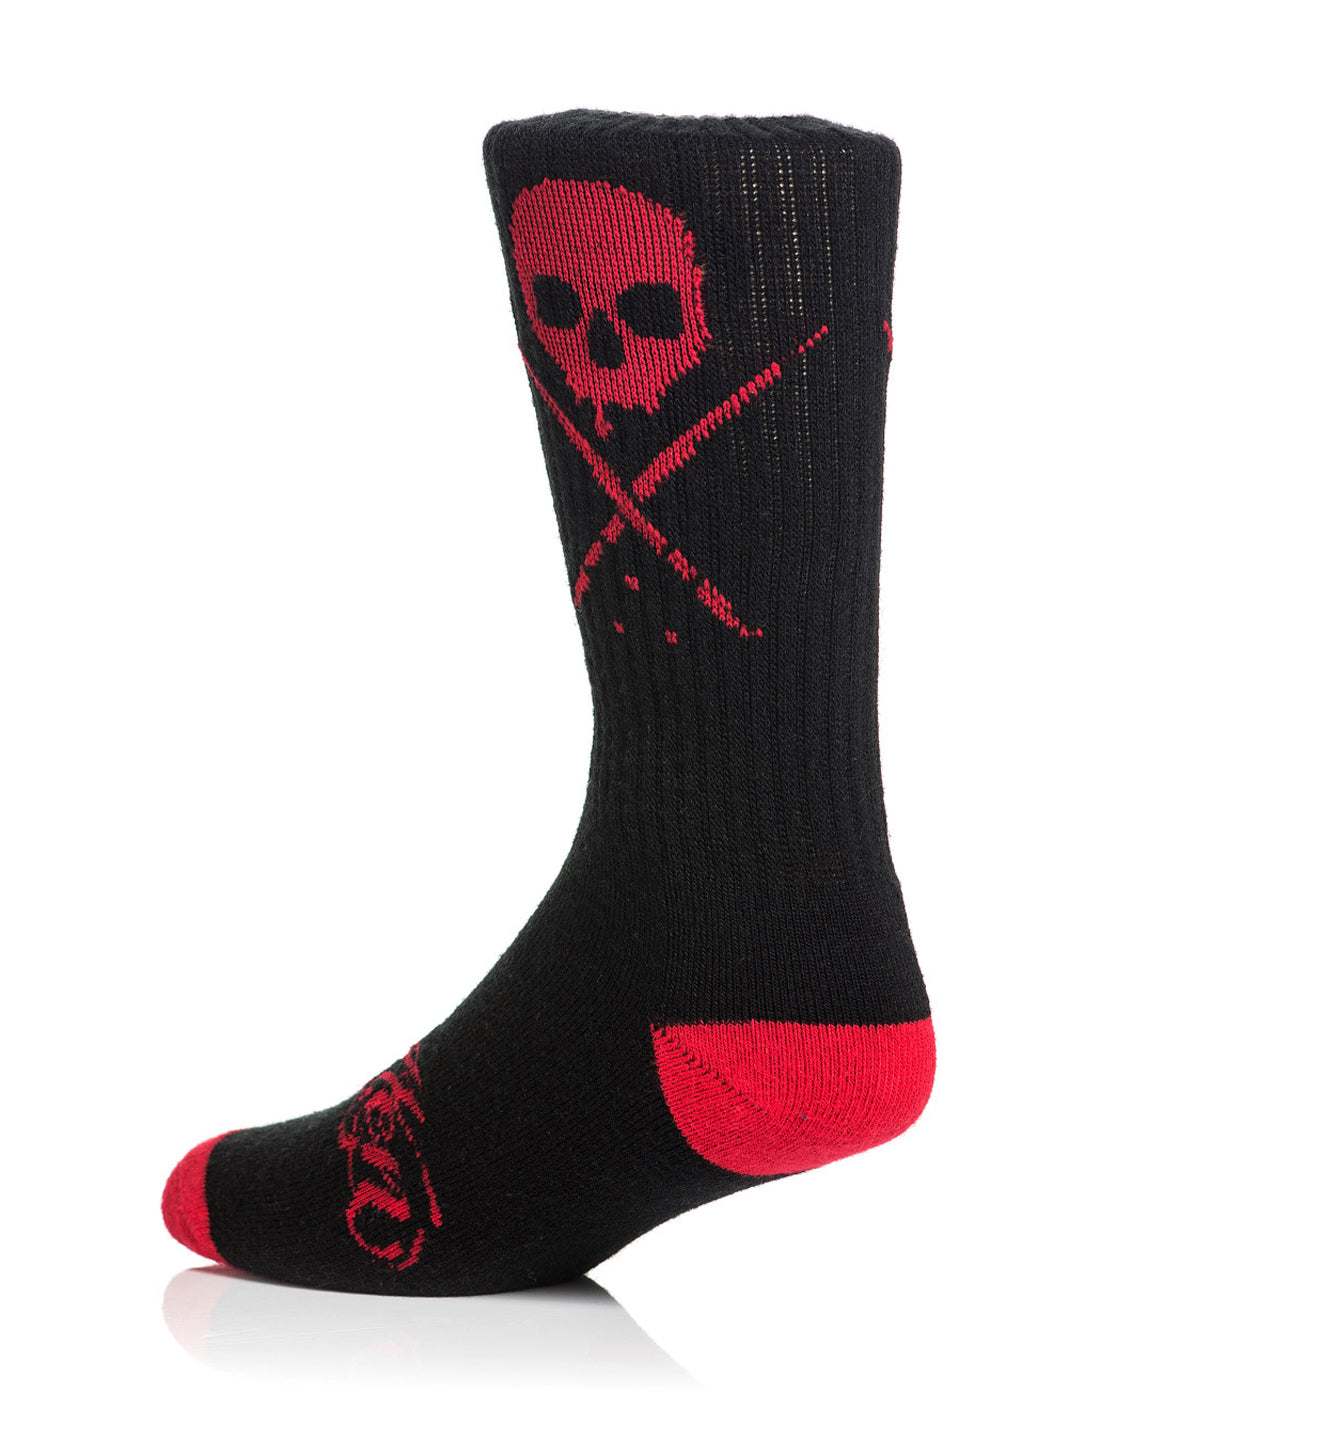 Standard Issue Socks Black/Red